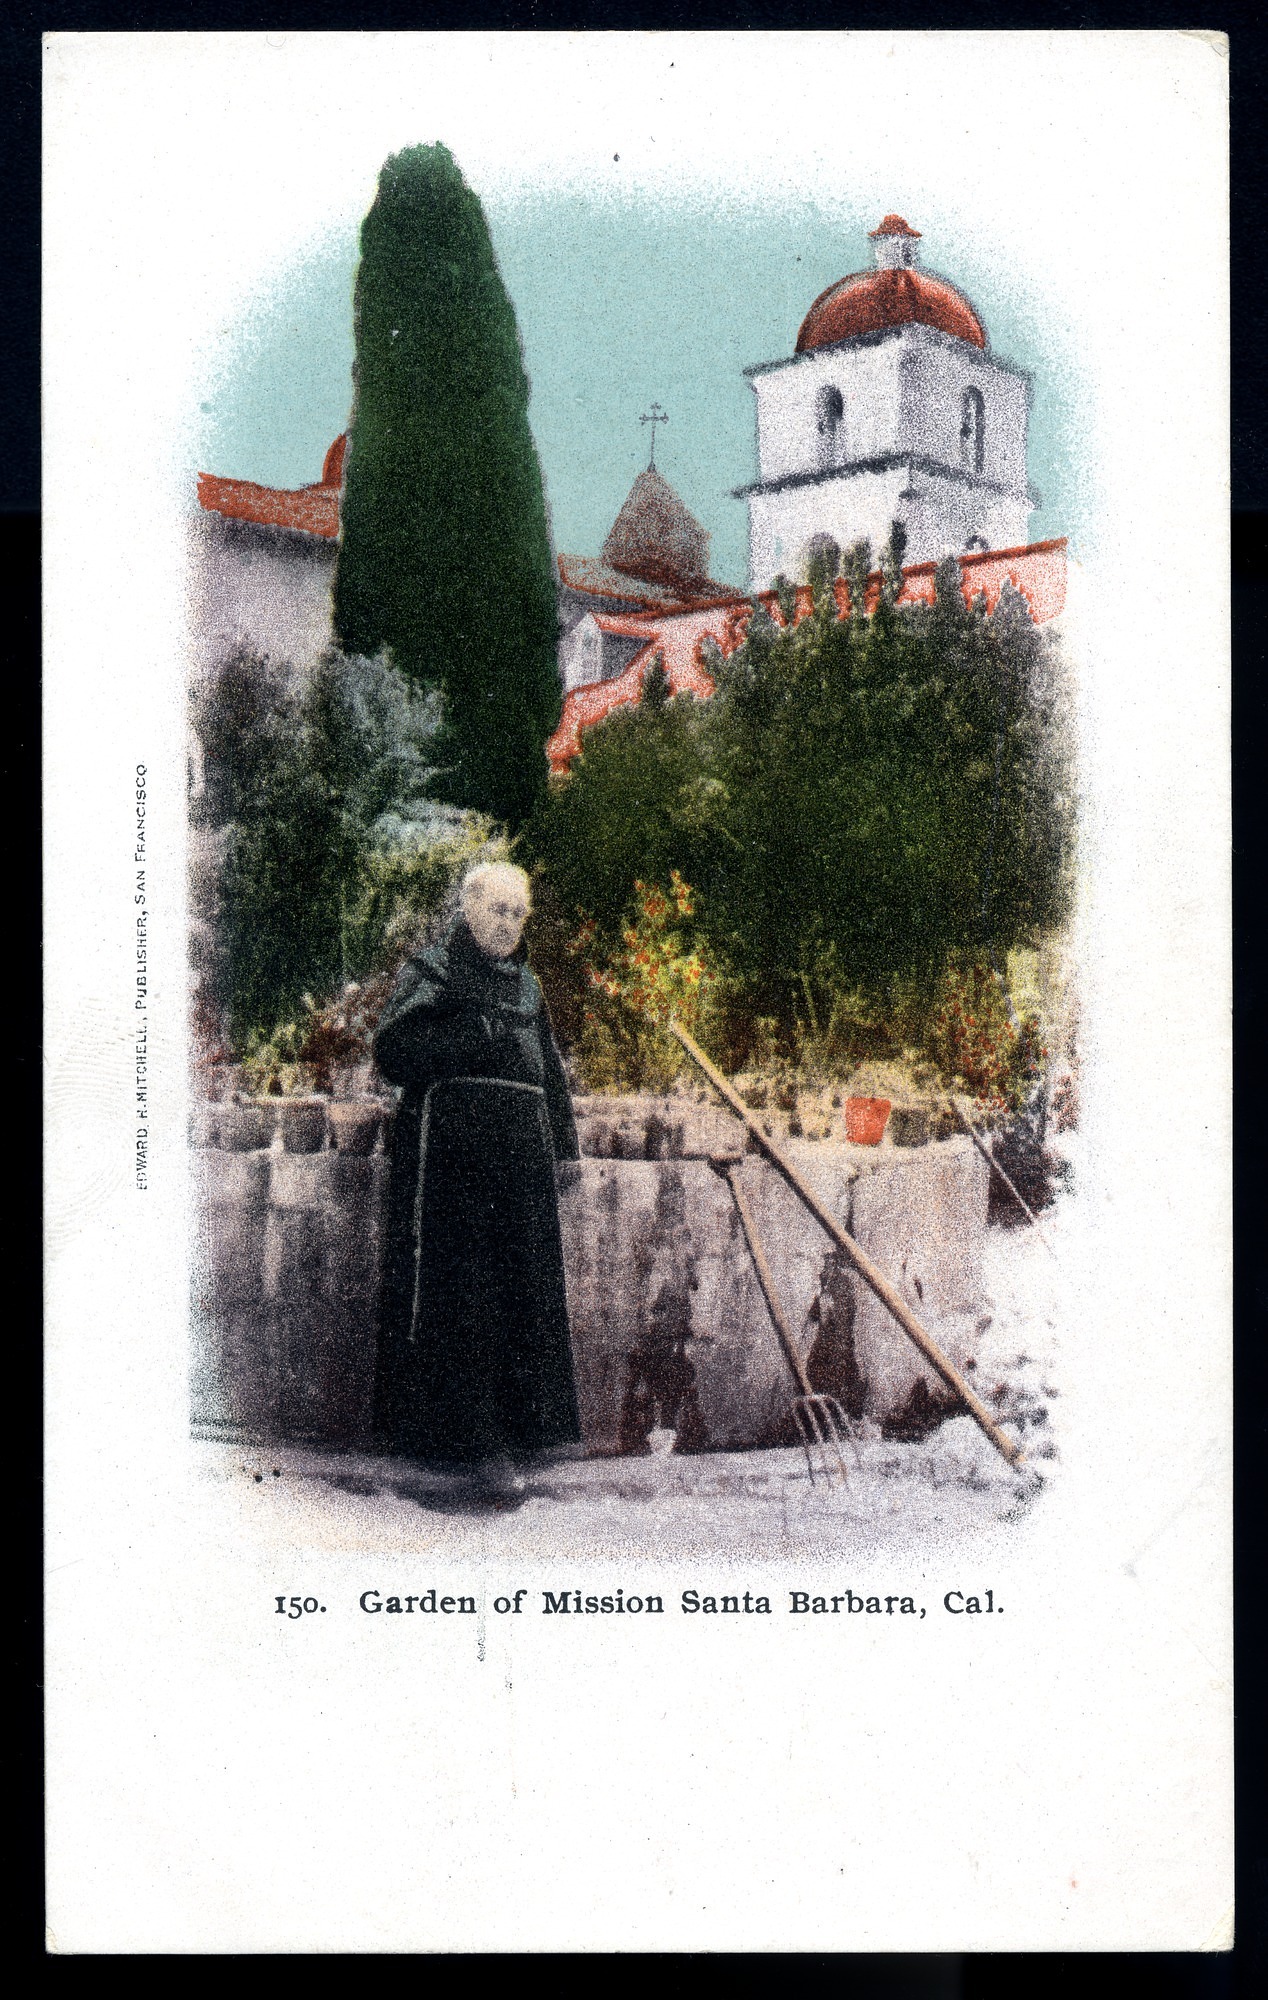 Postcard 39 – Garden of Mission Santa Barbara, Cal. Edward H. Mitchell Company. ca 1900. NMAH GA.24880.016.